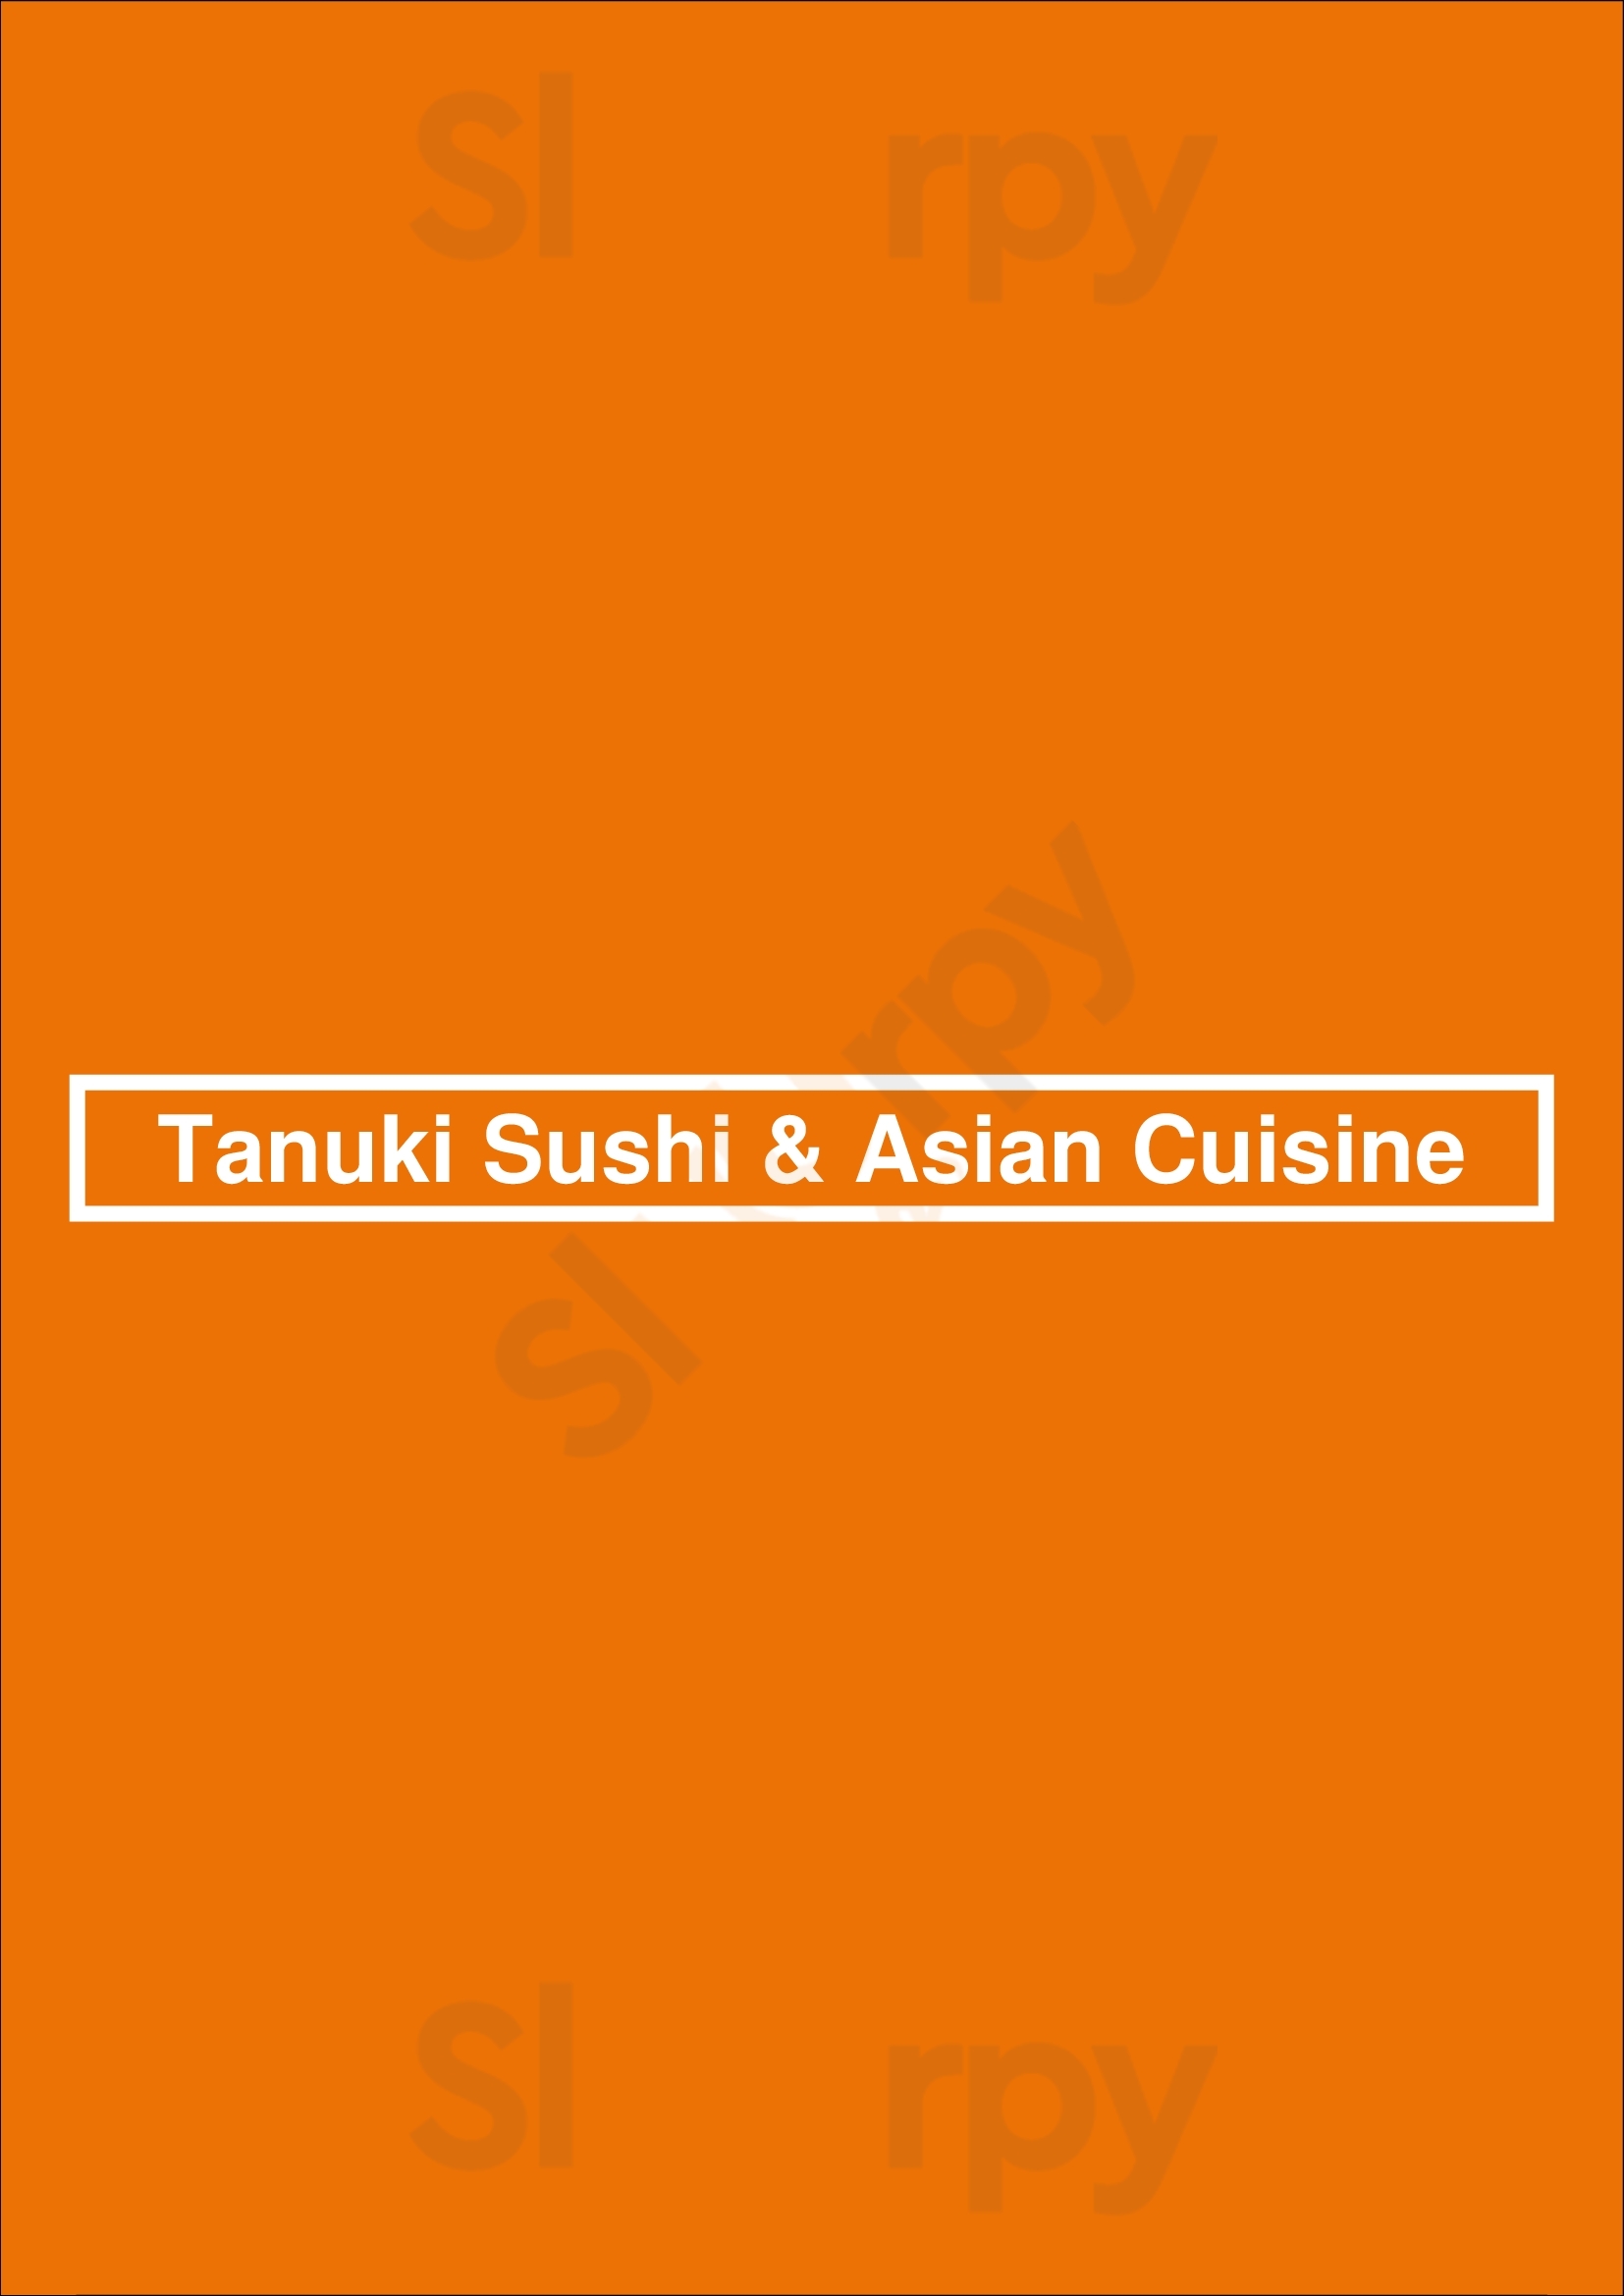 Tanuki Sushi & Asian Cuisine Oss Menu - 1